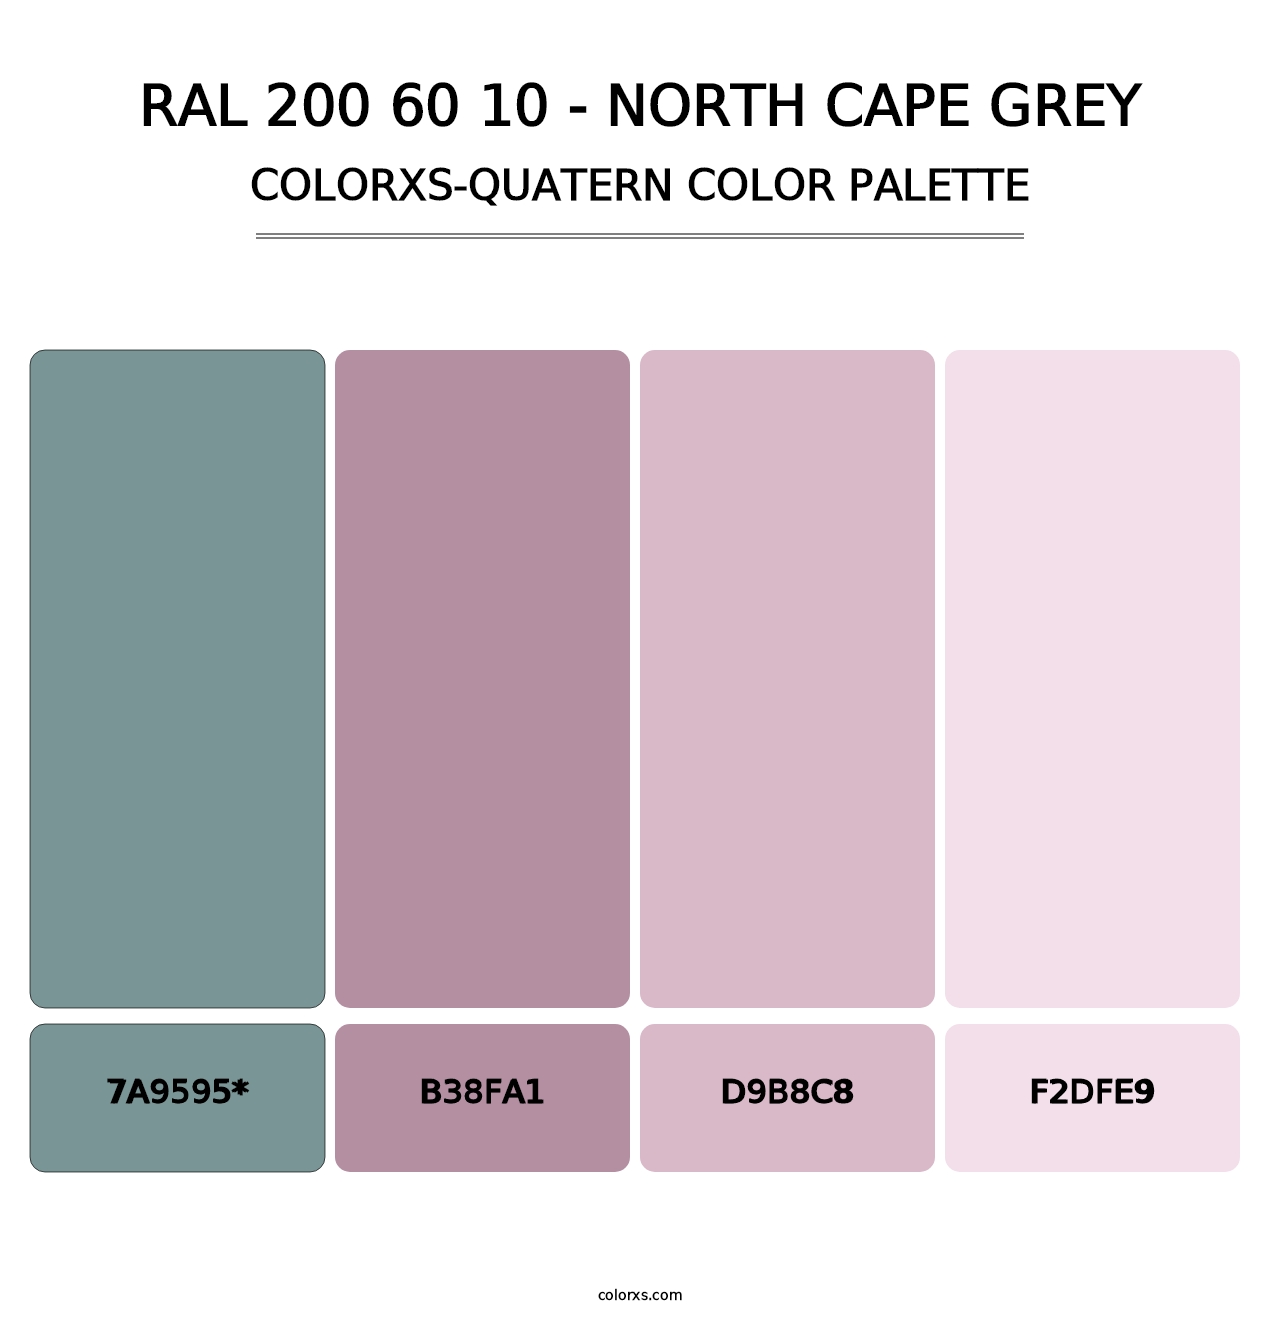 RAL 200 60 10 - North Cape Grey - Colorxs Quatern Palette